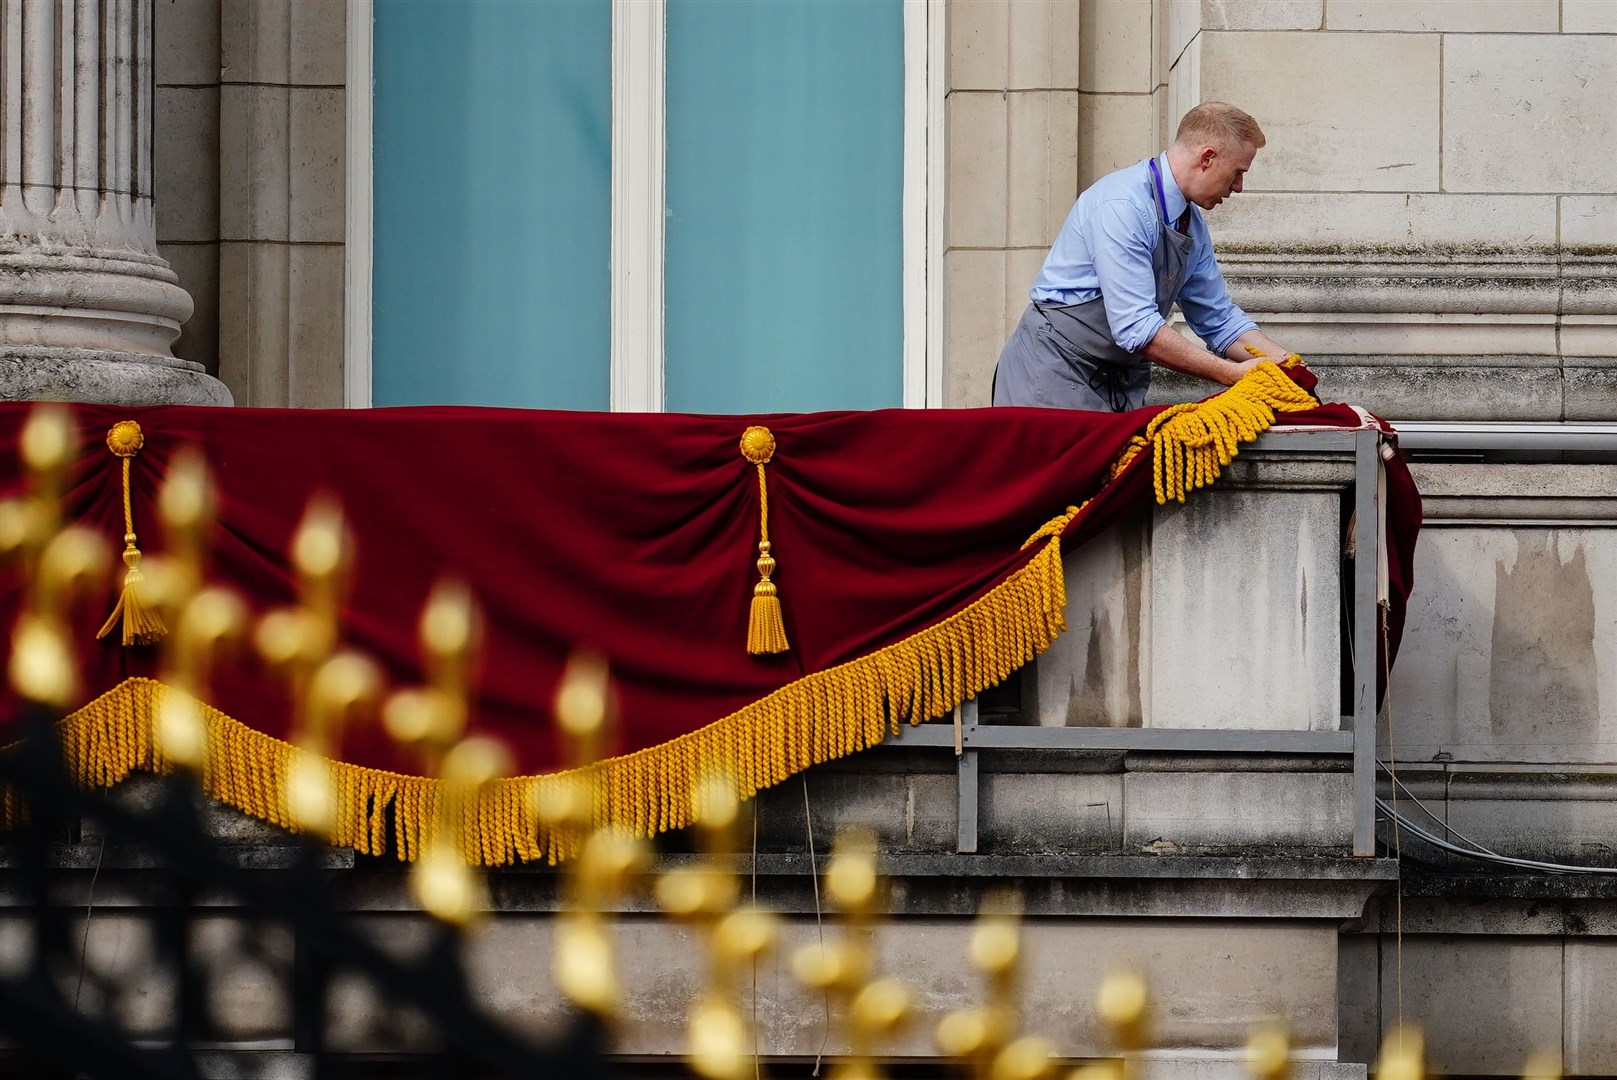 Preparation work on the balcony at Buckingham Palace (Victoria Jones/PA)